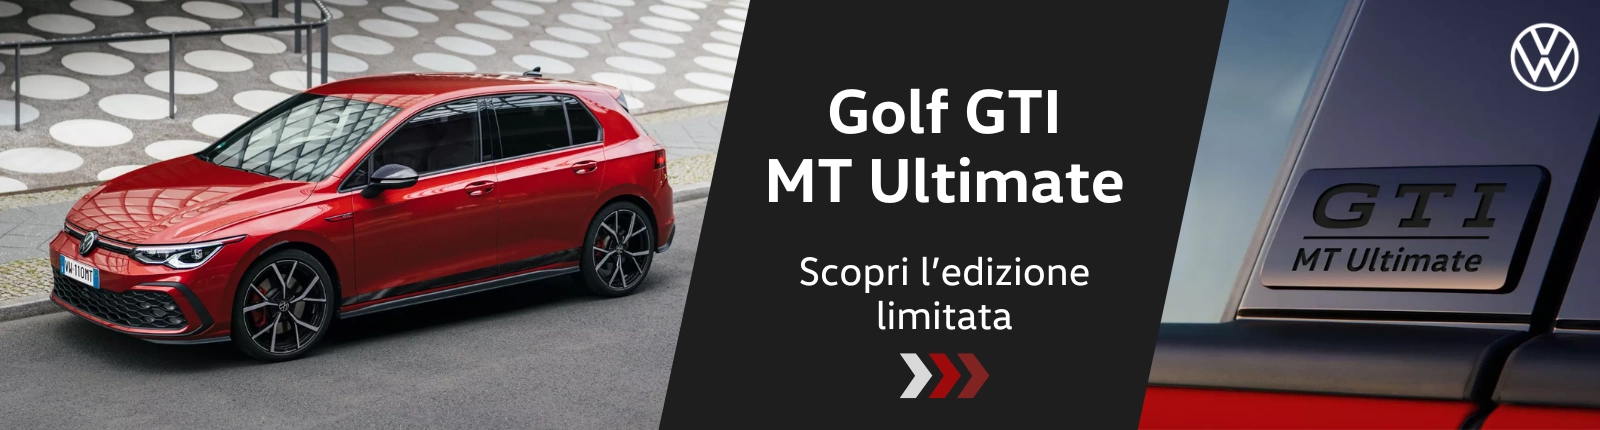 Golf GTI MT Ultimate